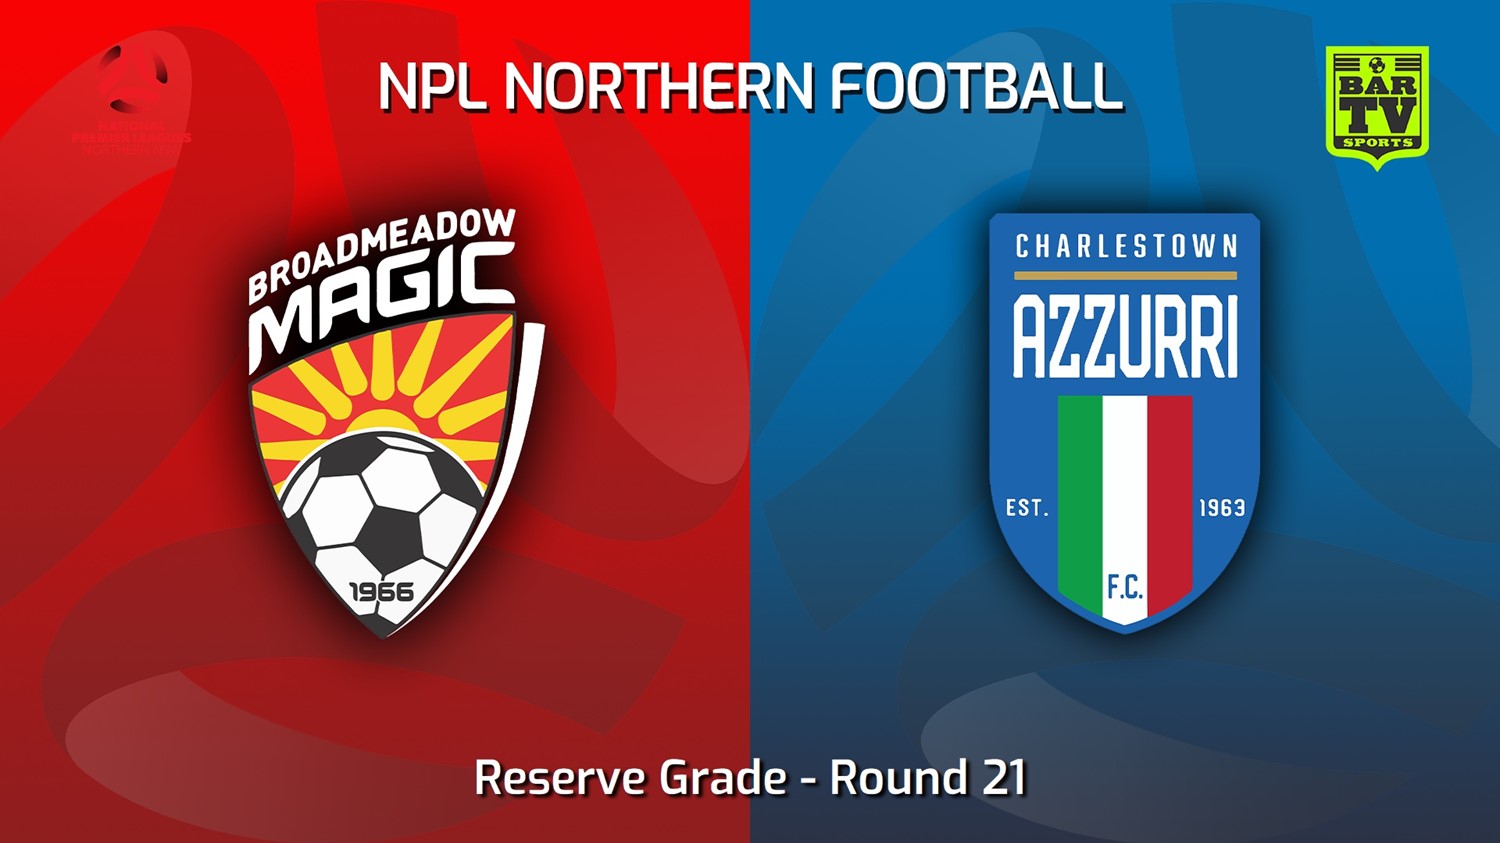 220807-NNSW NPLM Res Round 21 - Broadmeadow Magic Res v Charlestown Azzurri FC Res Minigame Slate Image